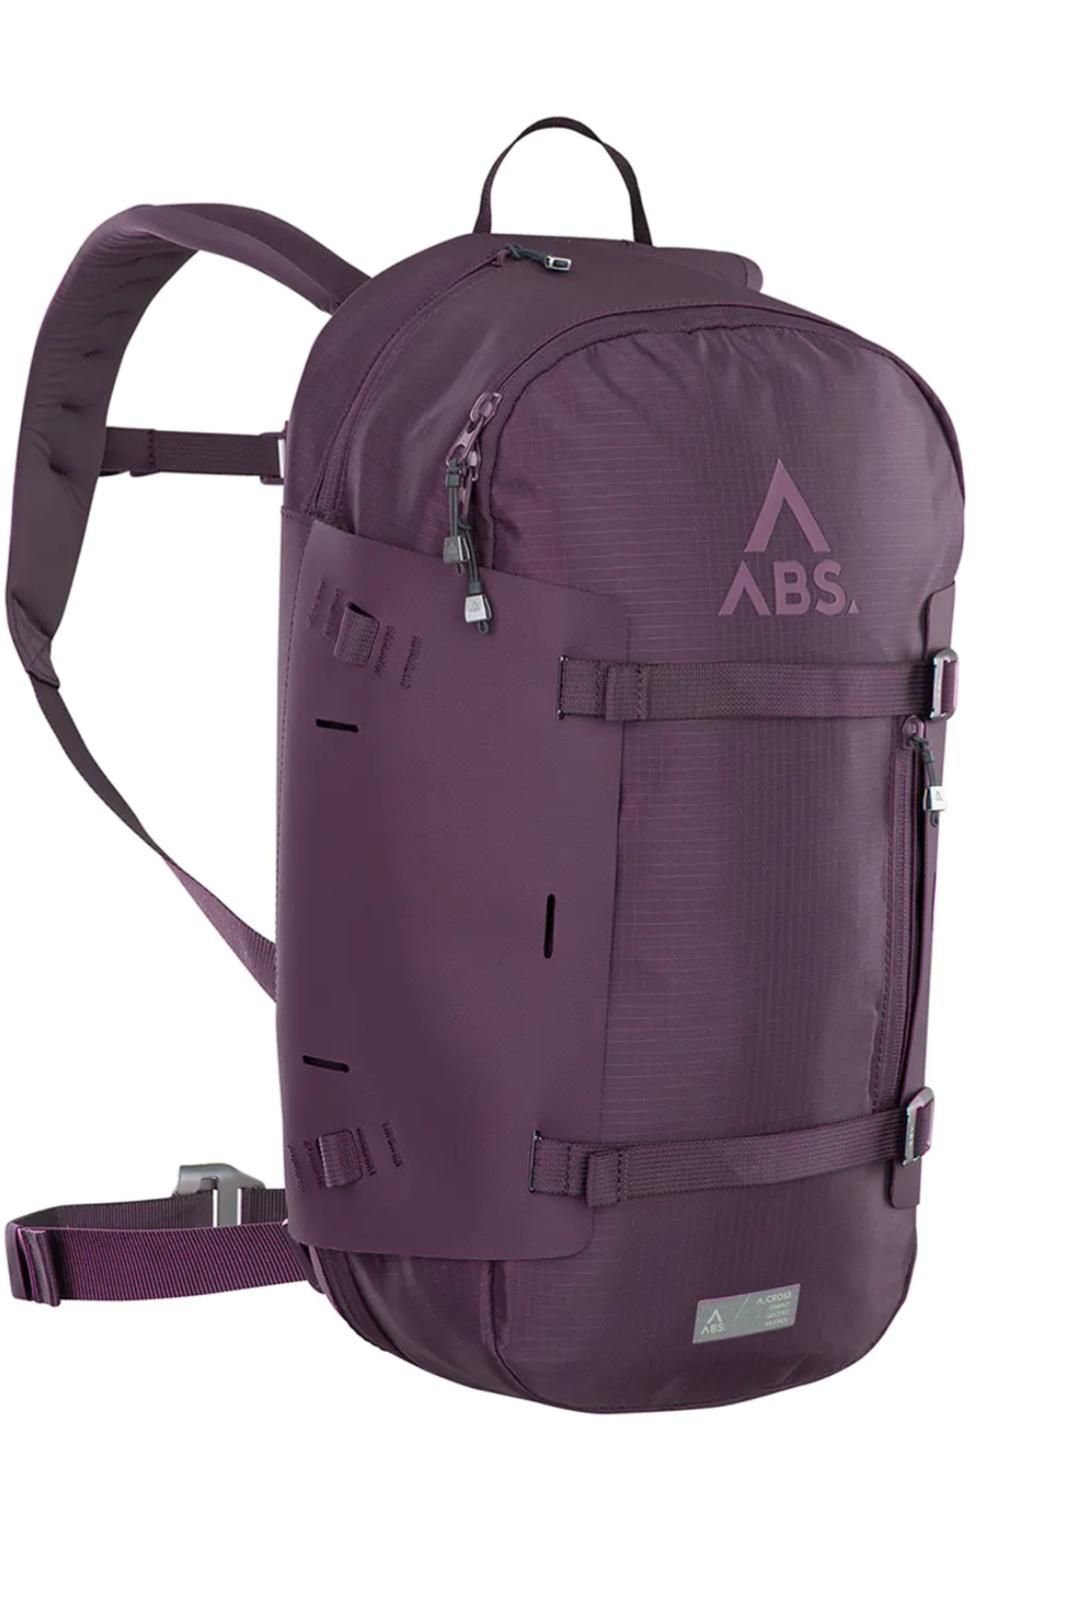 Plecak turystyczny ABS A.Cross+